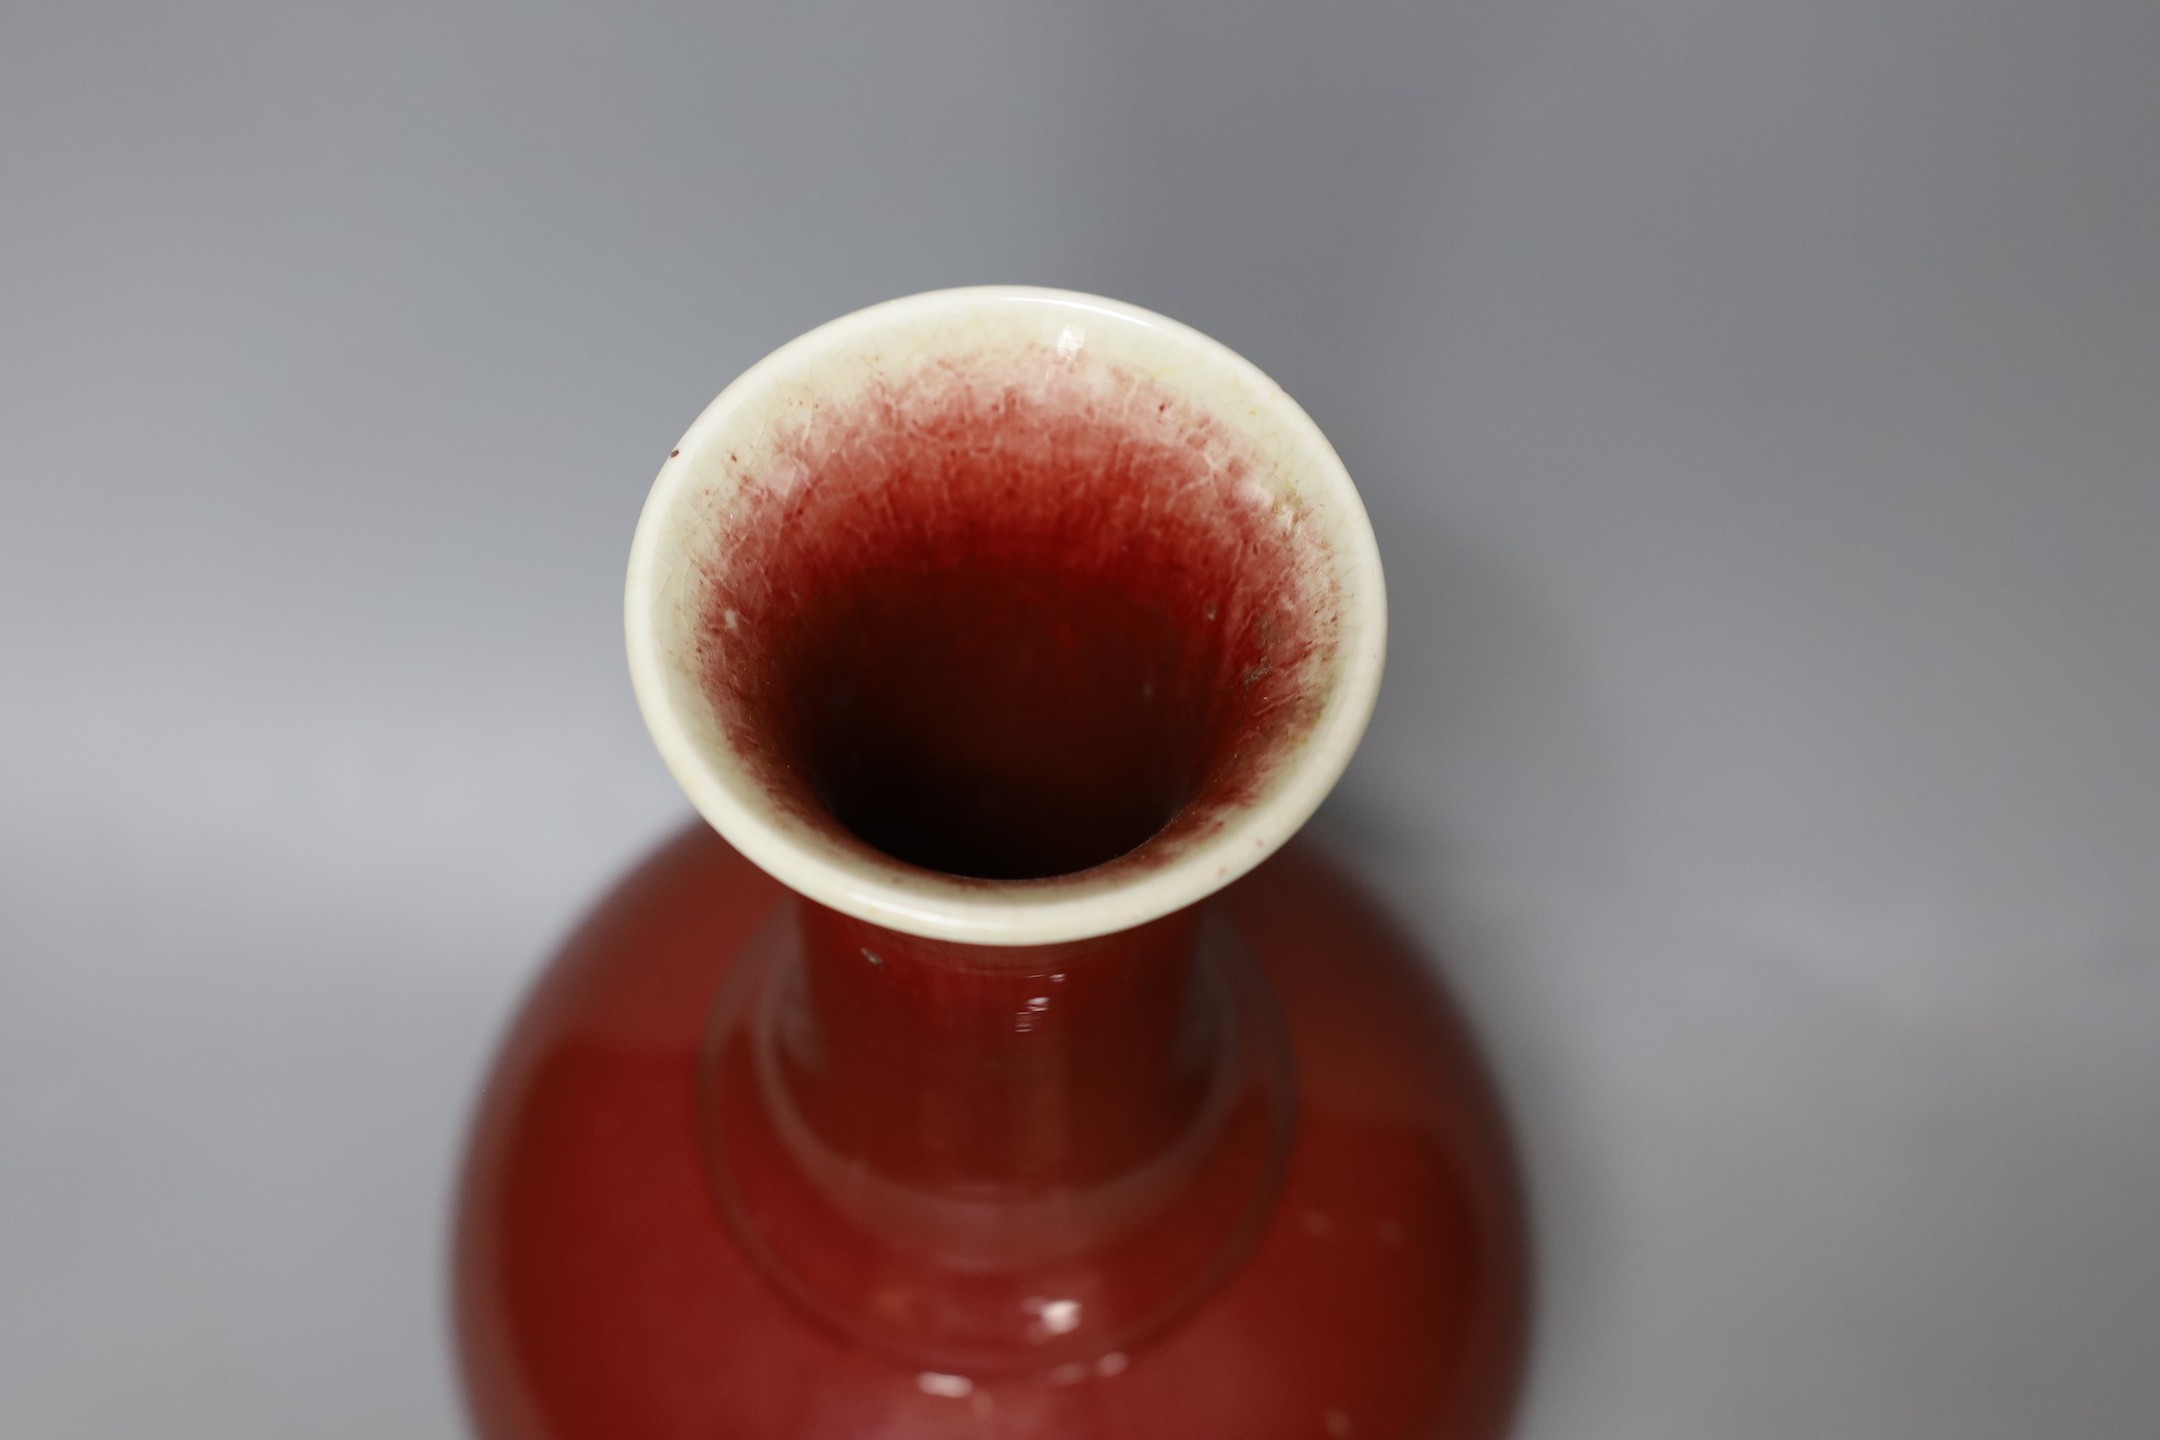 A Chinese ox blood bottle vase, mark to base 27cm